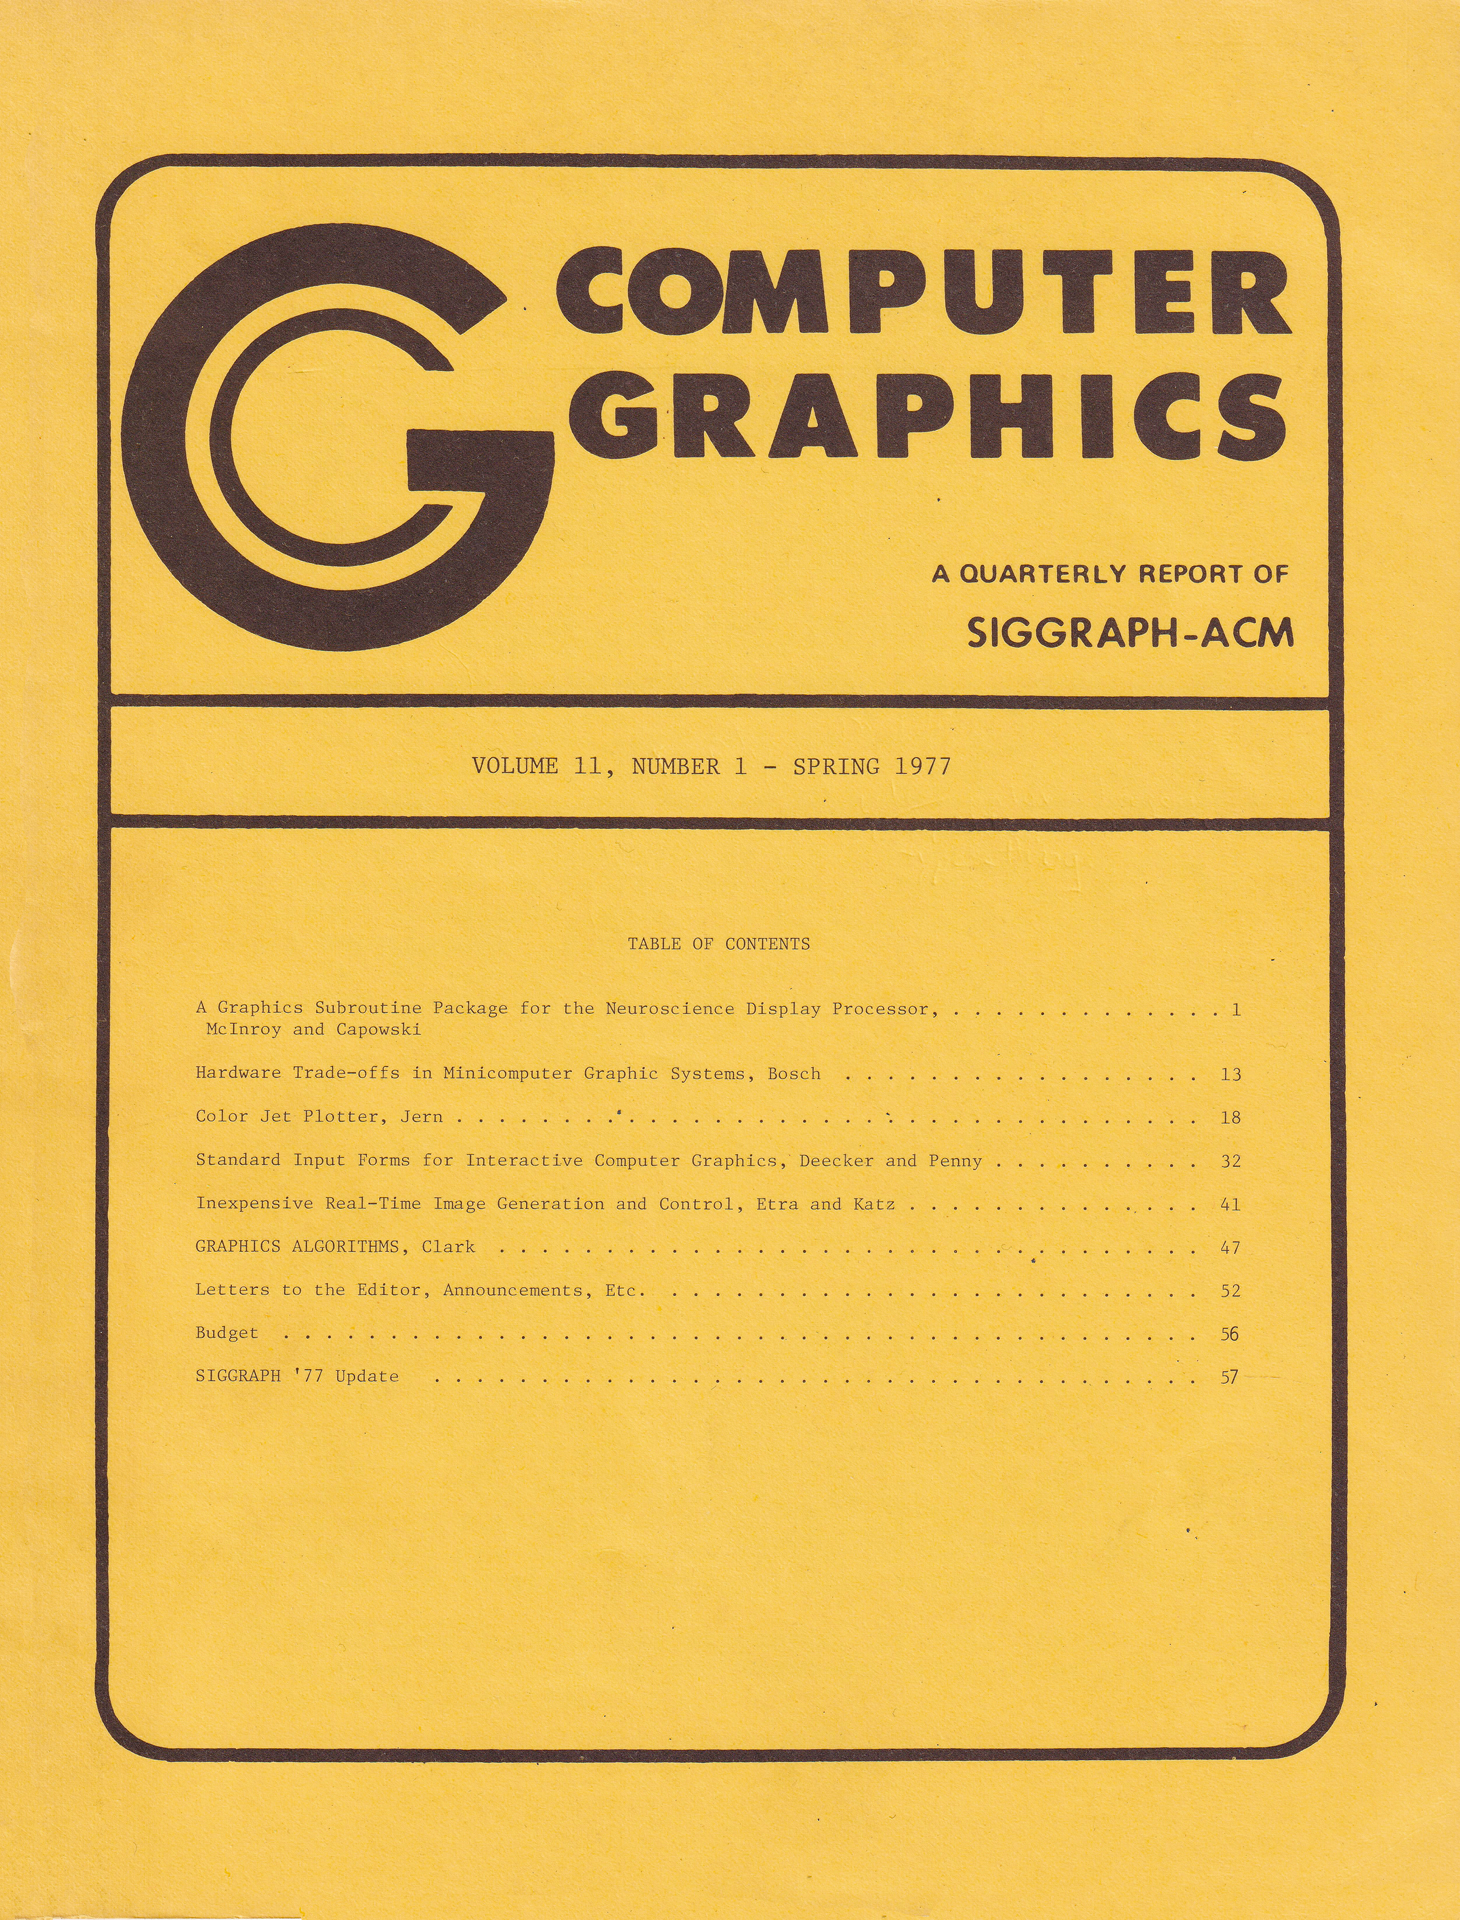 ©Computer Graphics A Quarterly Report of SIGGRAPH-ACM